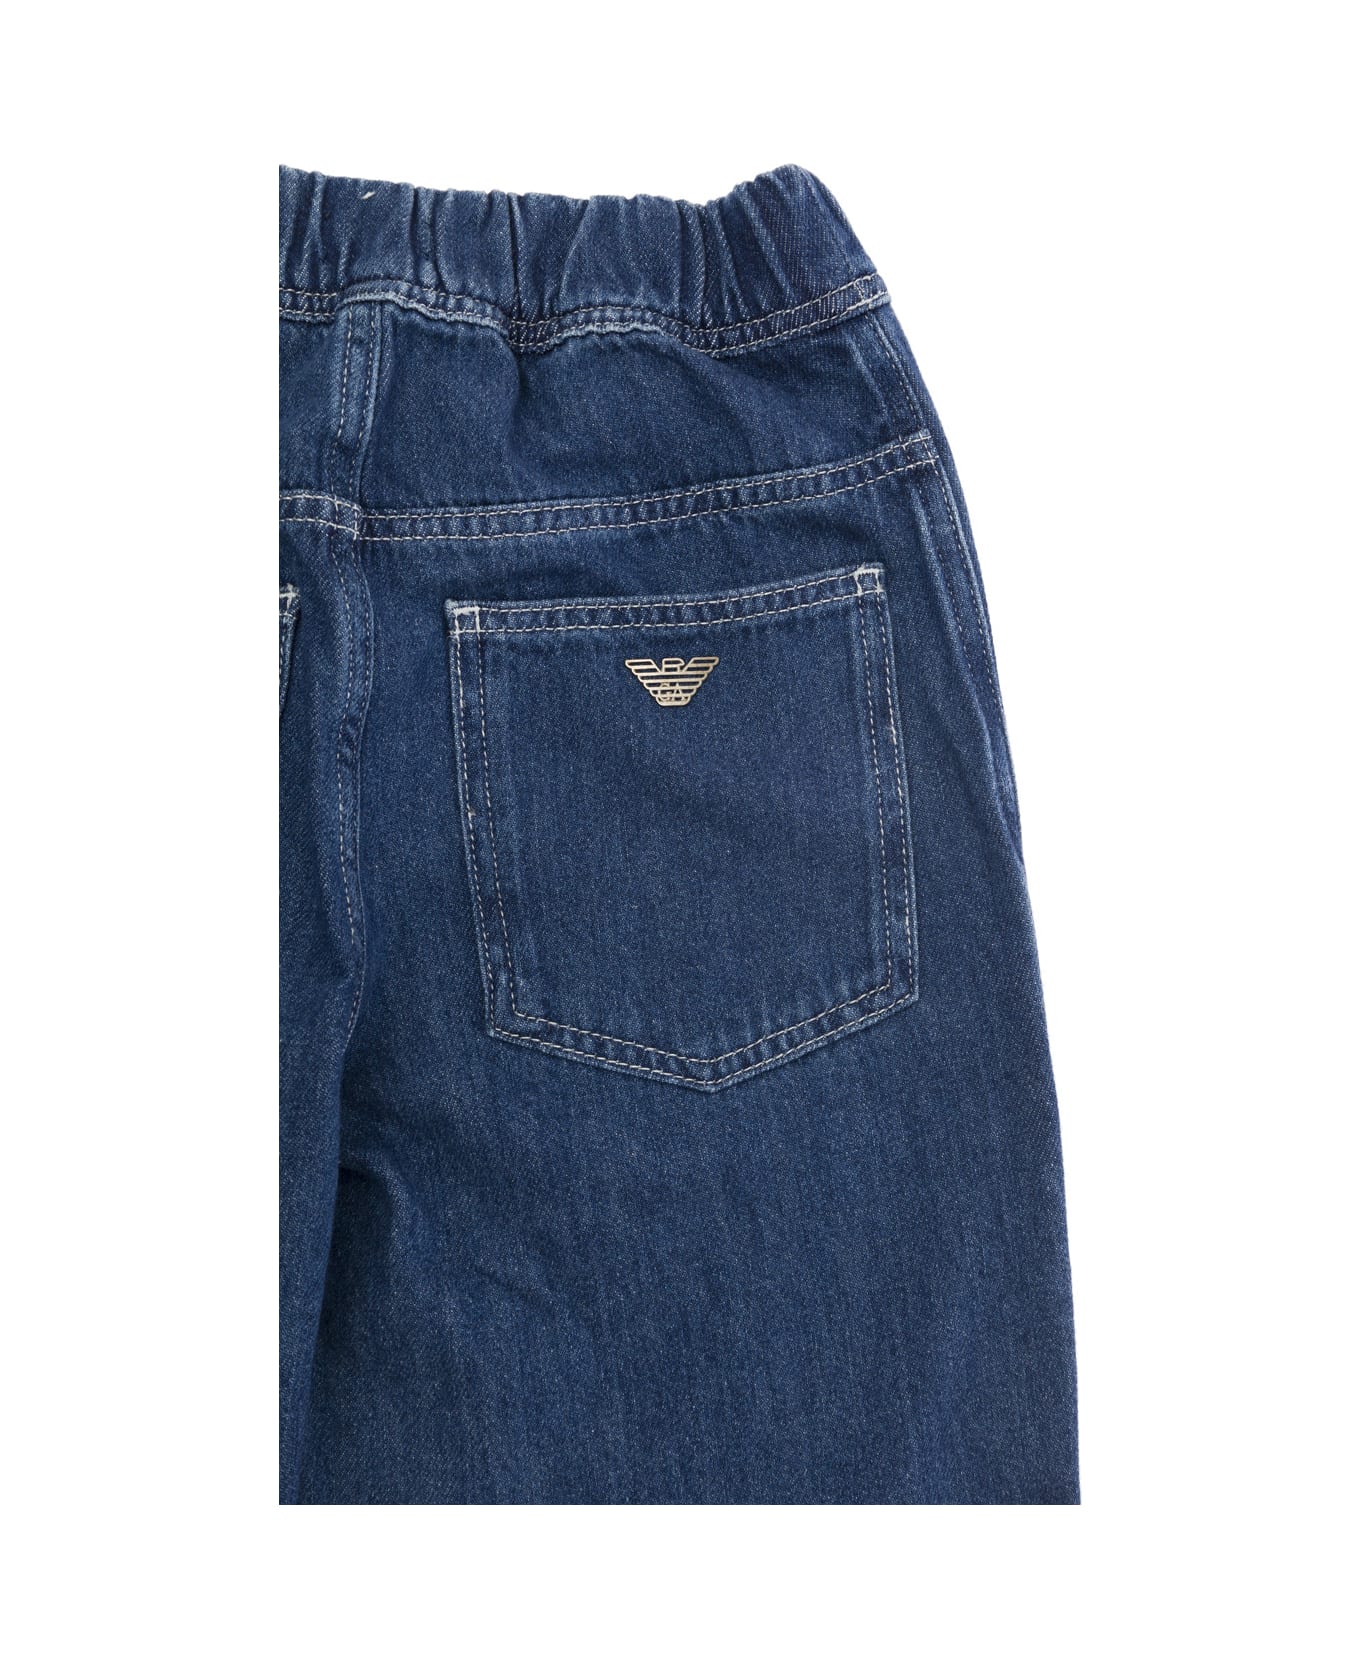 Emporio Armani Blue Jeans With Elasticized Cuffs And Waist In Cotton Denim Boy - Blu